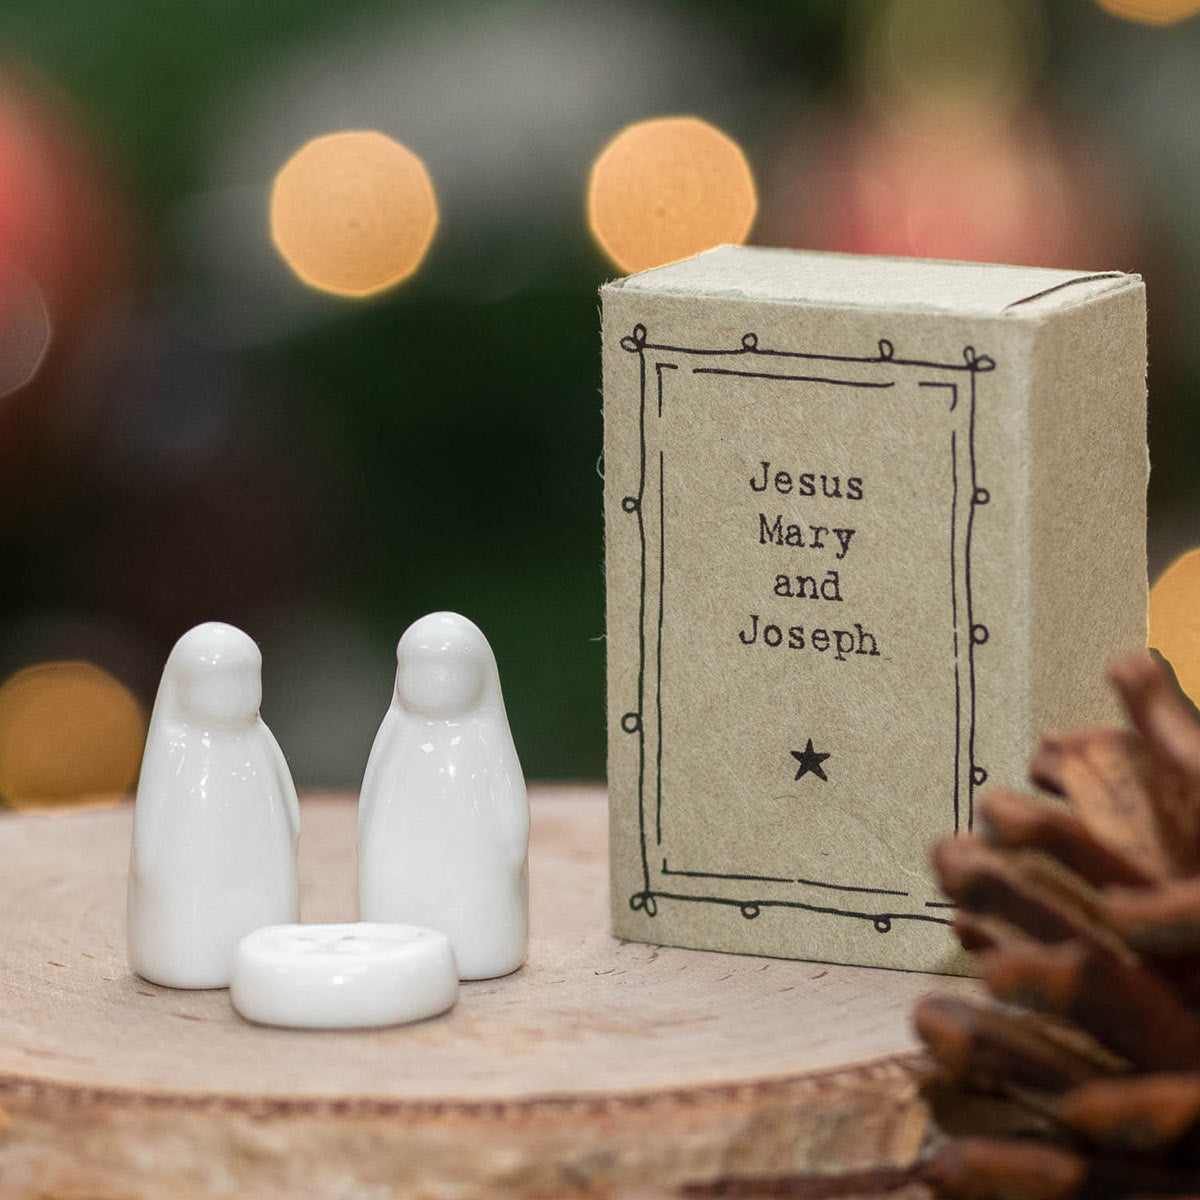 East of India Matchbox - Ceramic Ornament - Jesus, Mary & Joseph